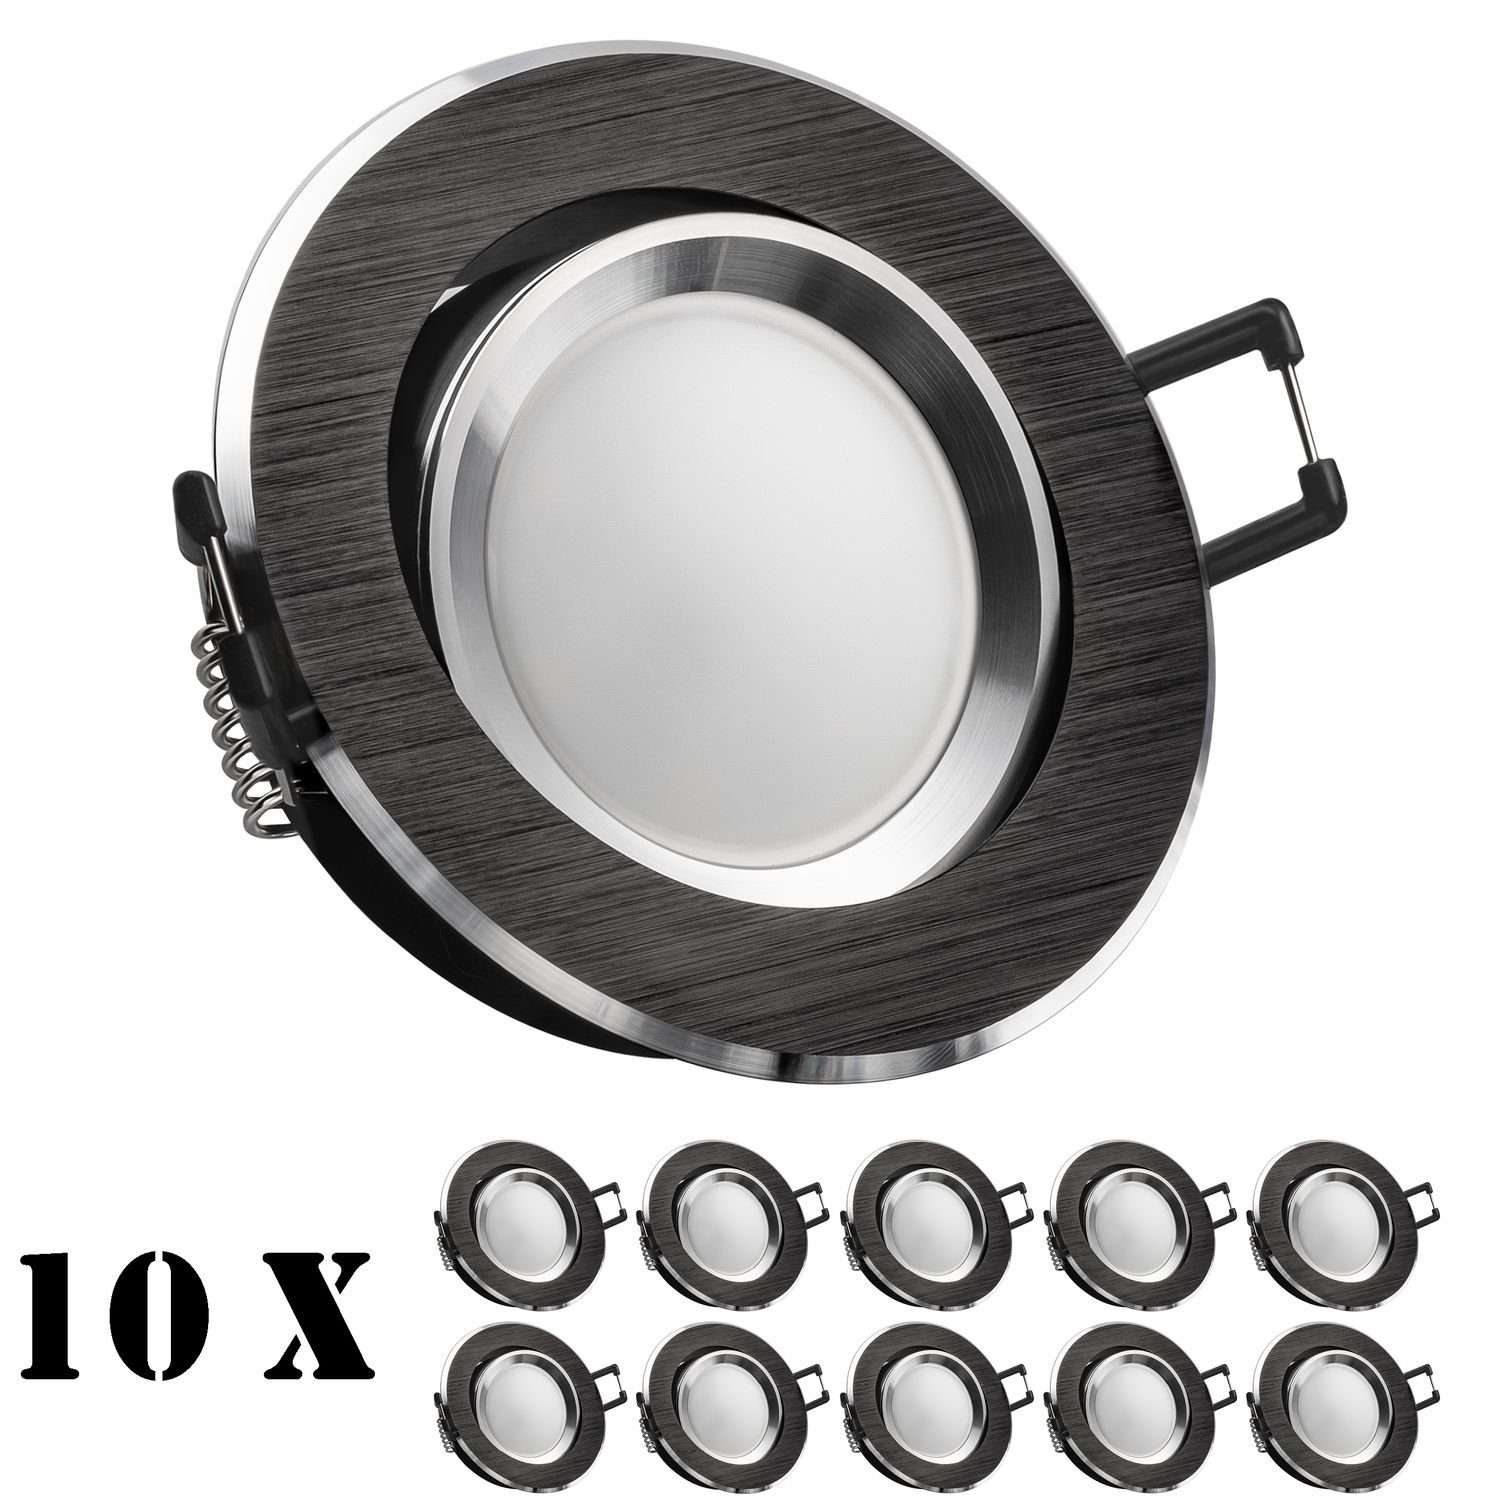 Einbaustrahler Einbaustrahler Mar schwarz) LEDANDO LED GU10 10er mit Bicolor / LED Set (chrom LED